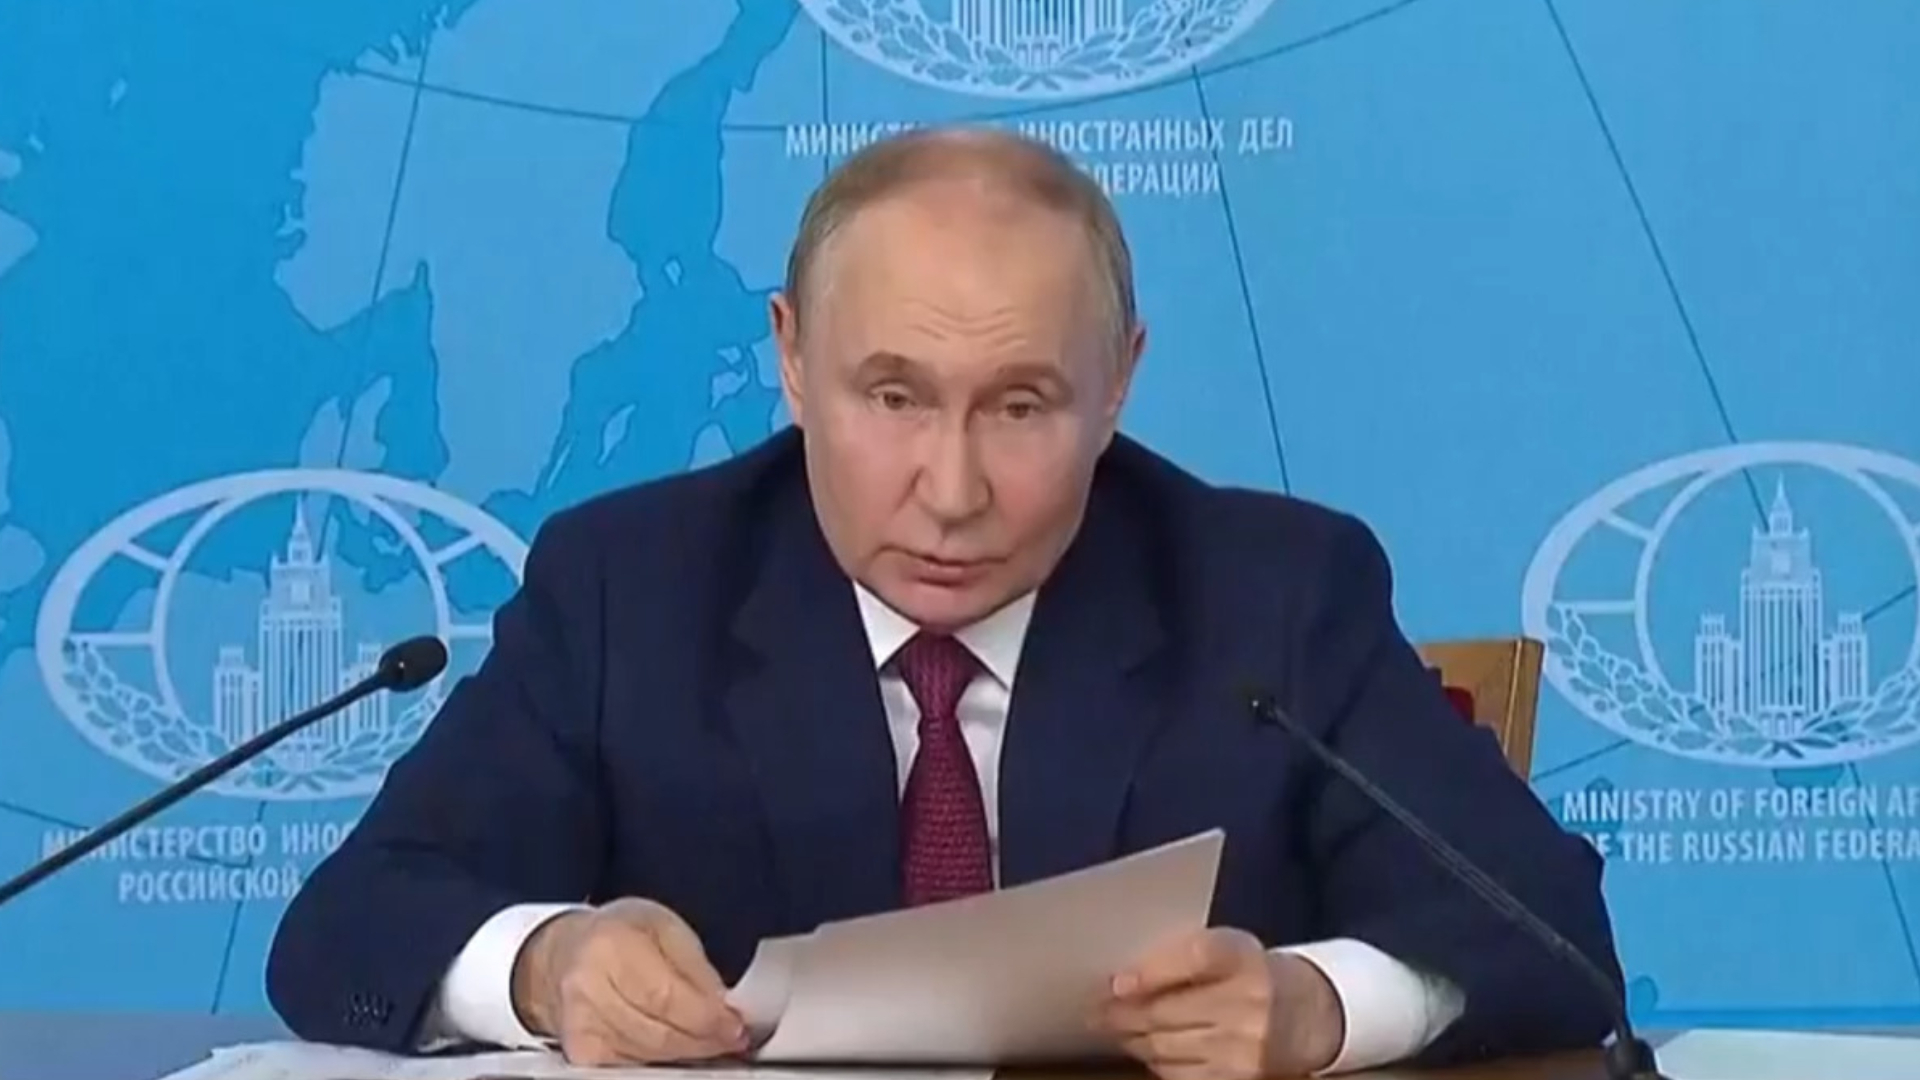 Putin lays out ceasefire demands to Ukraine